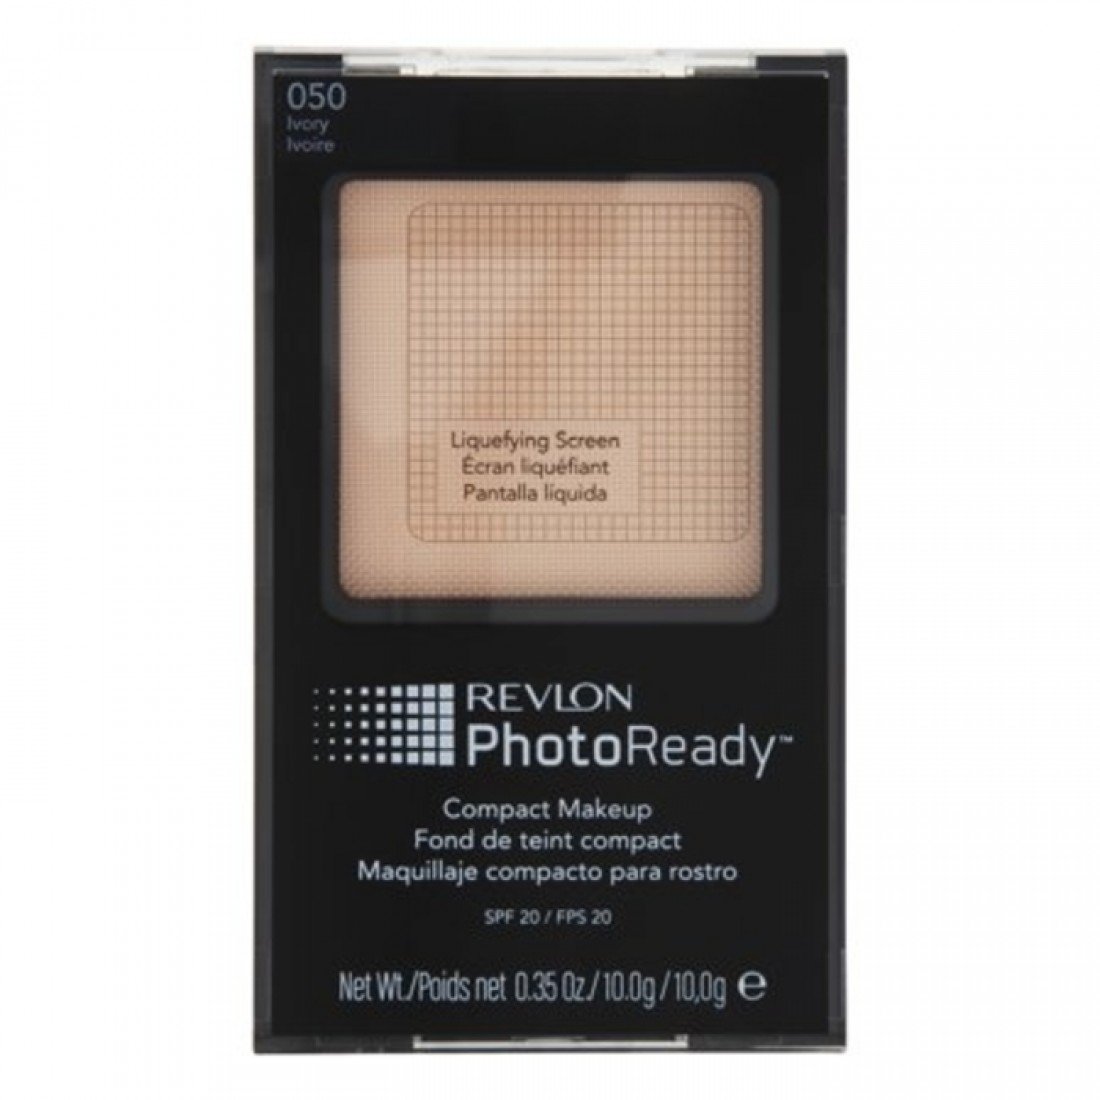 Revlon Photoready Compact Makeup – 100 Vanilla -050 Ivory